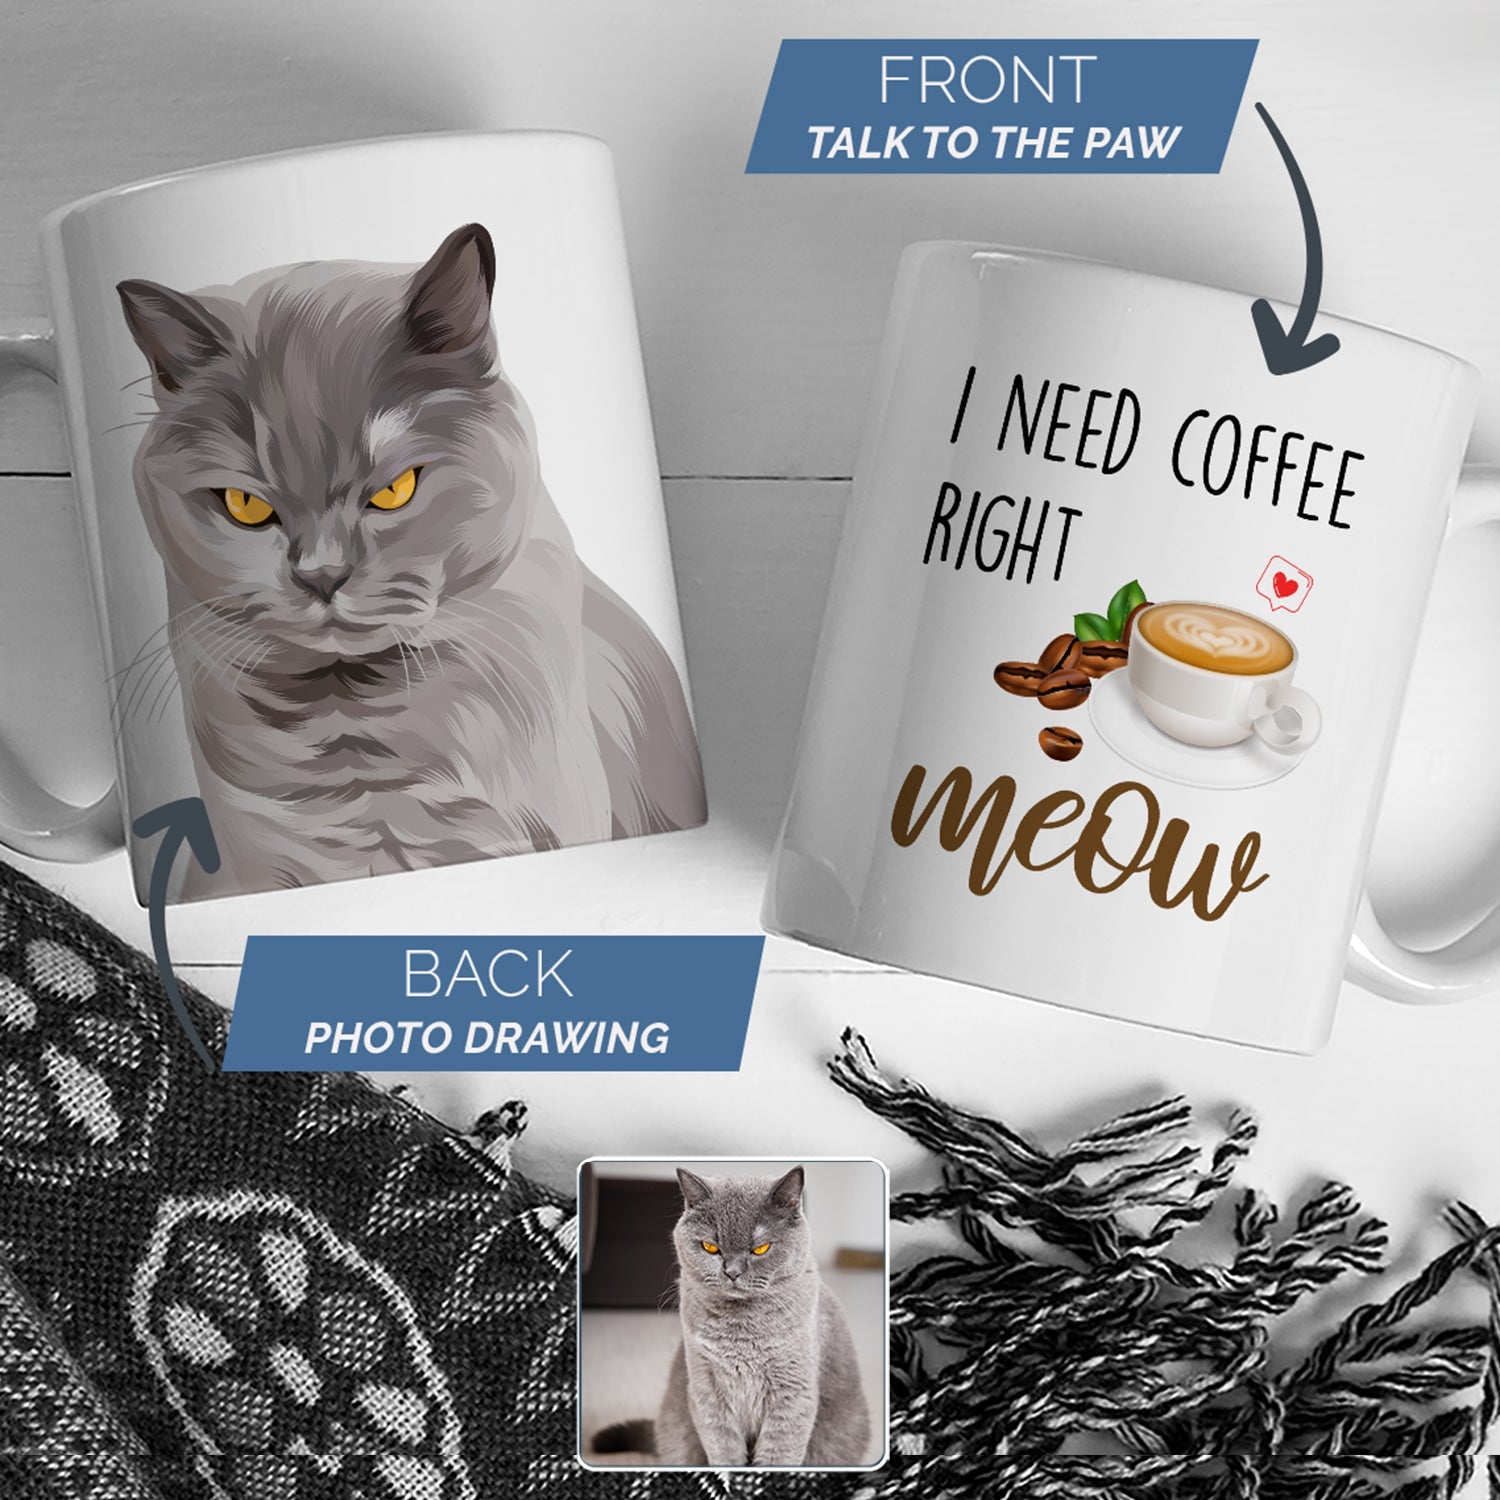 I Need Coffee Right Meow Mug Personalized